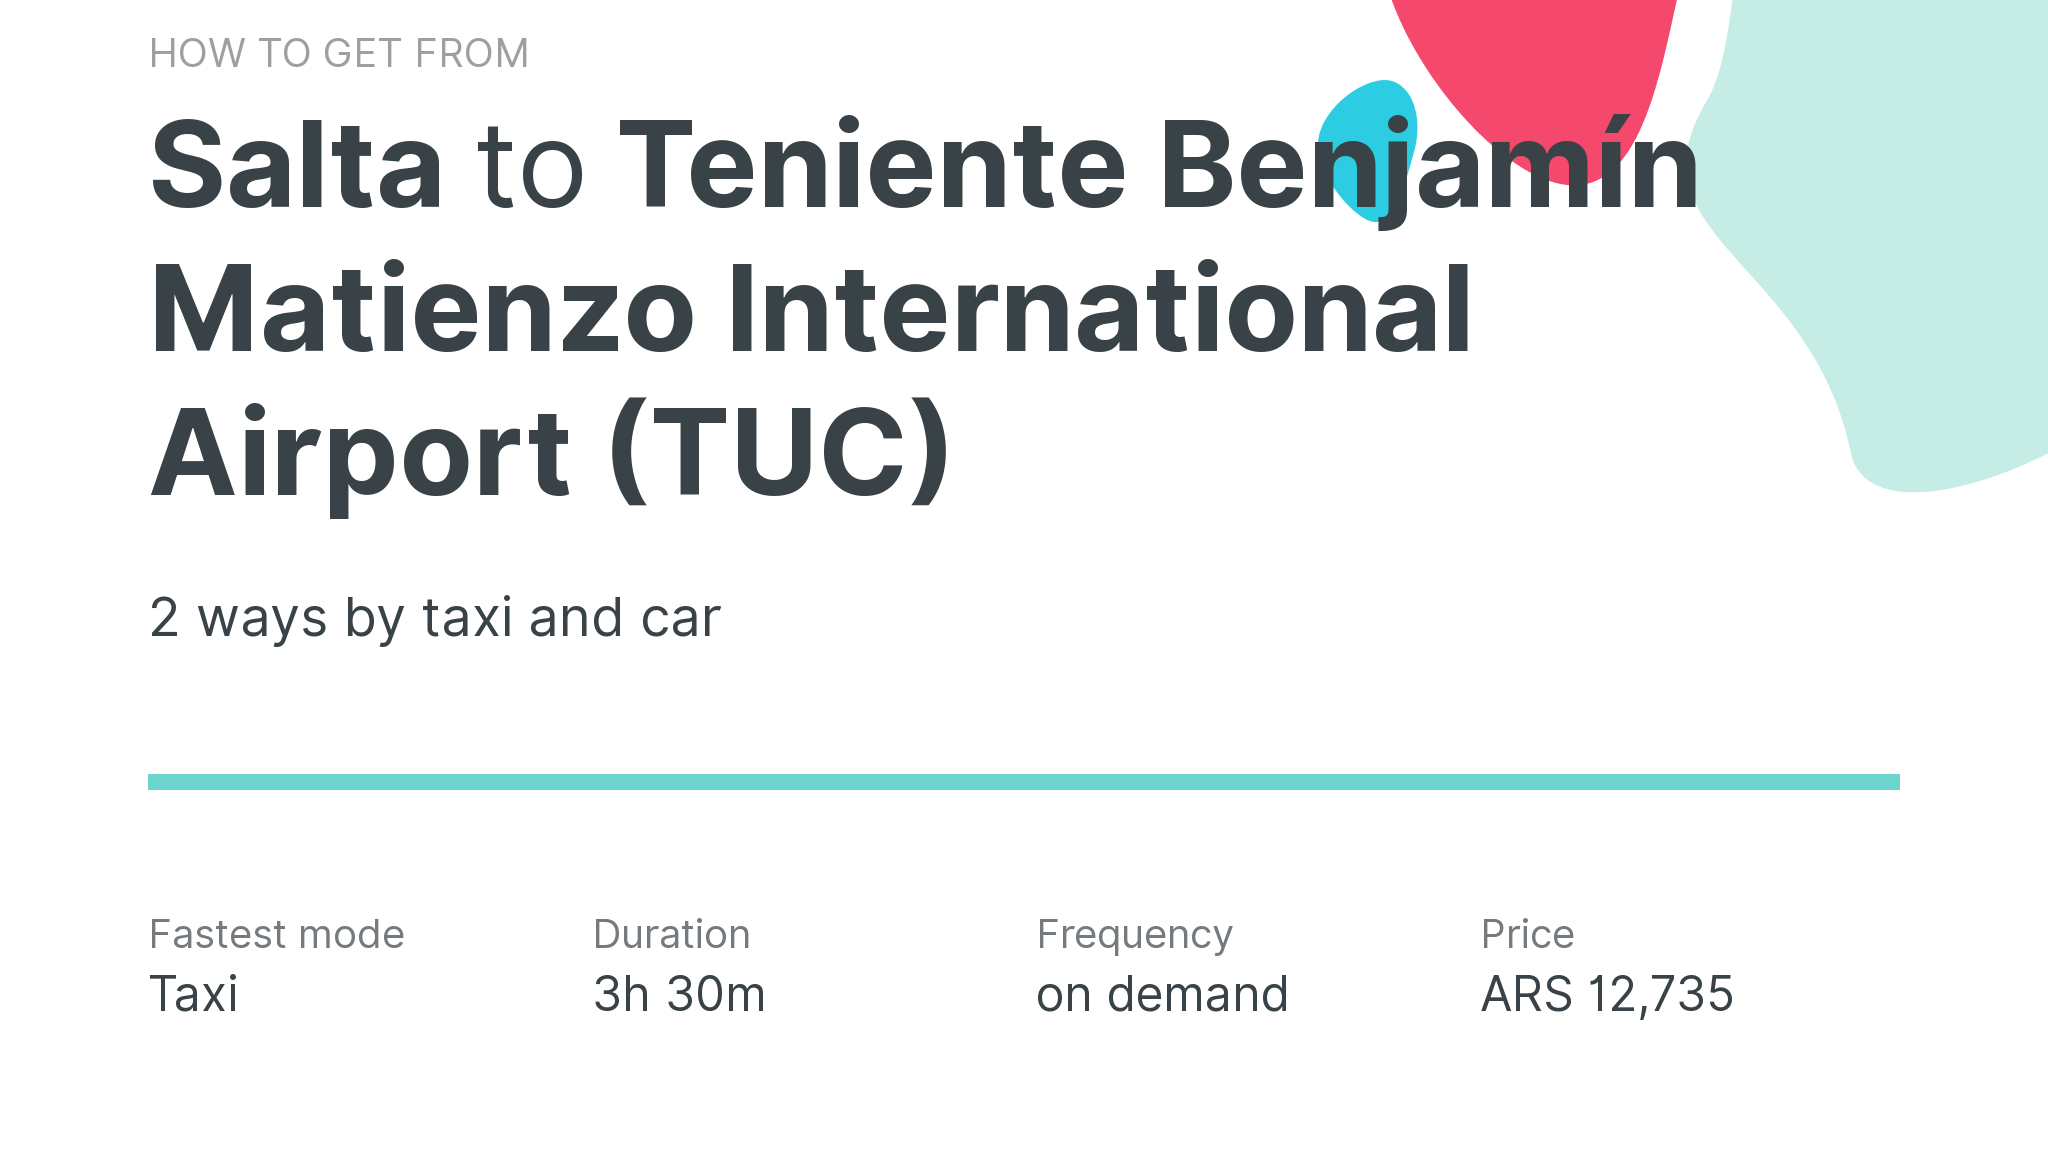 How do I get from Salta to Teniente Benjamín Matienzo International Airport (TUC)